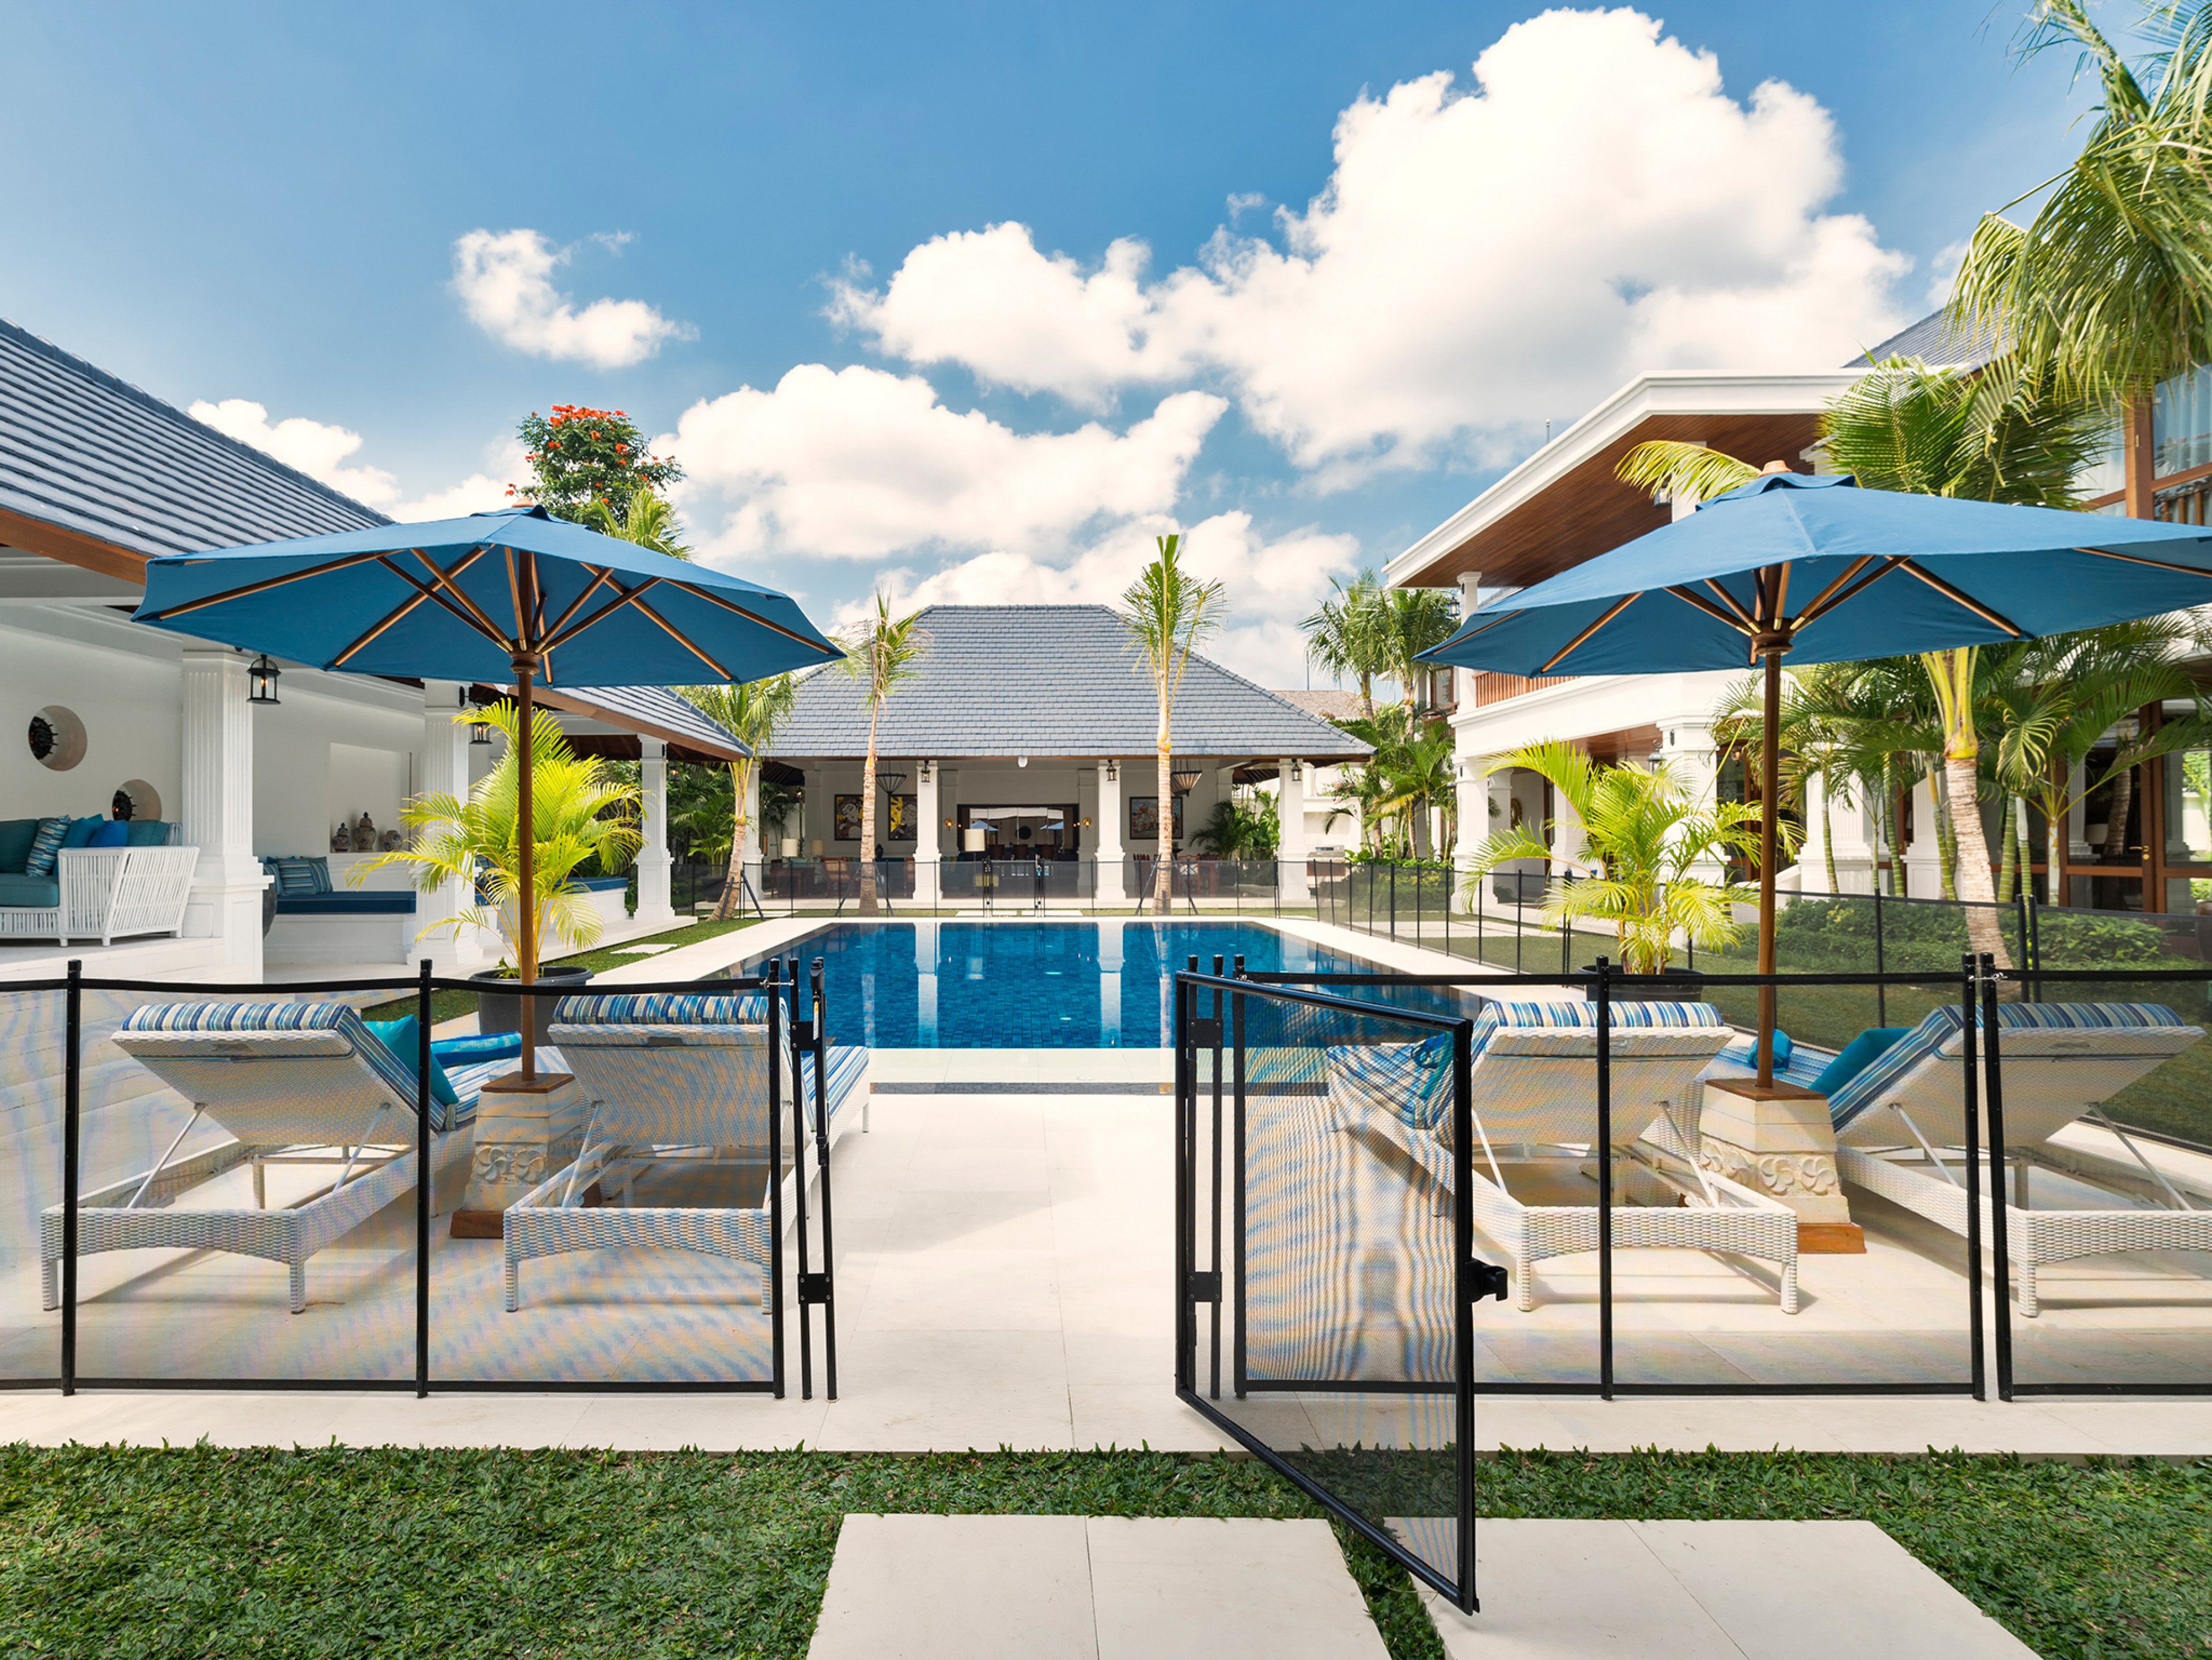  Seminyak 6649 - Villa Windu Asri - Indonesia Villas with pools